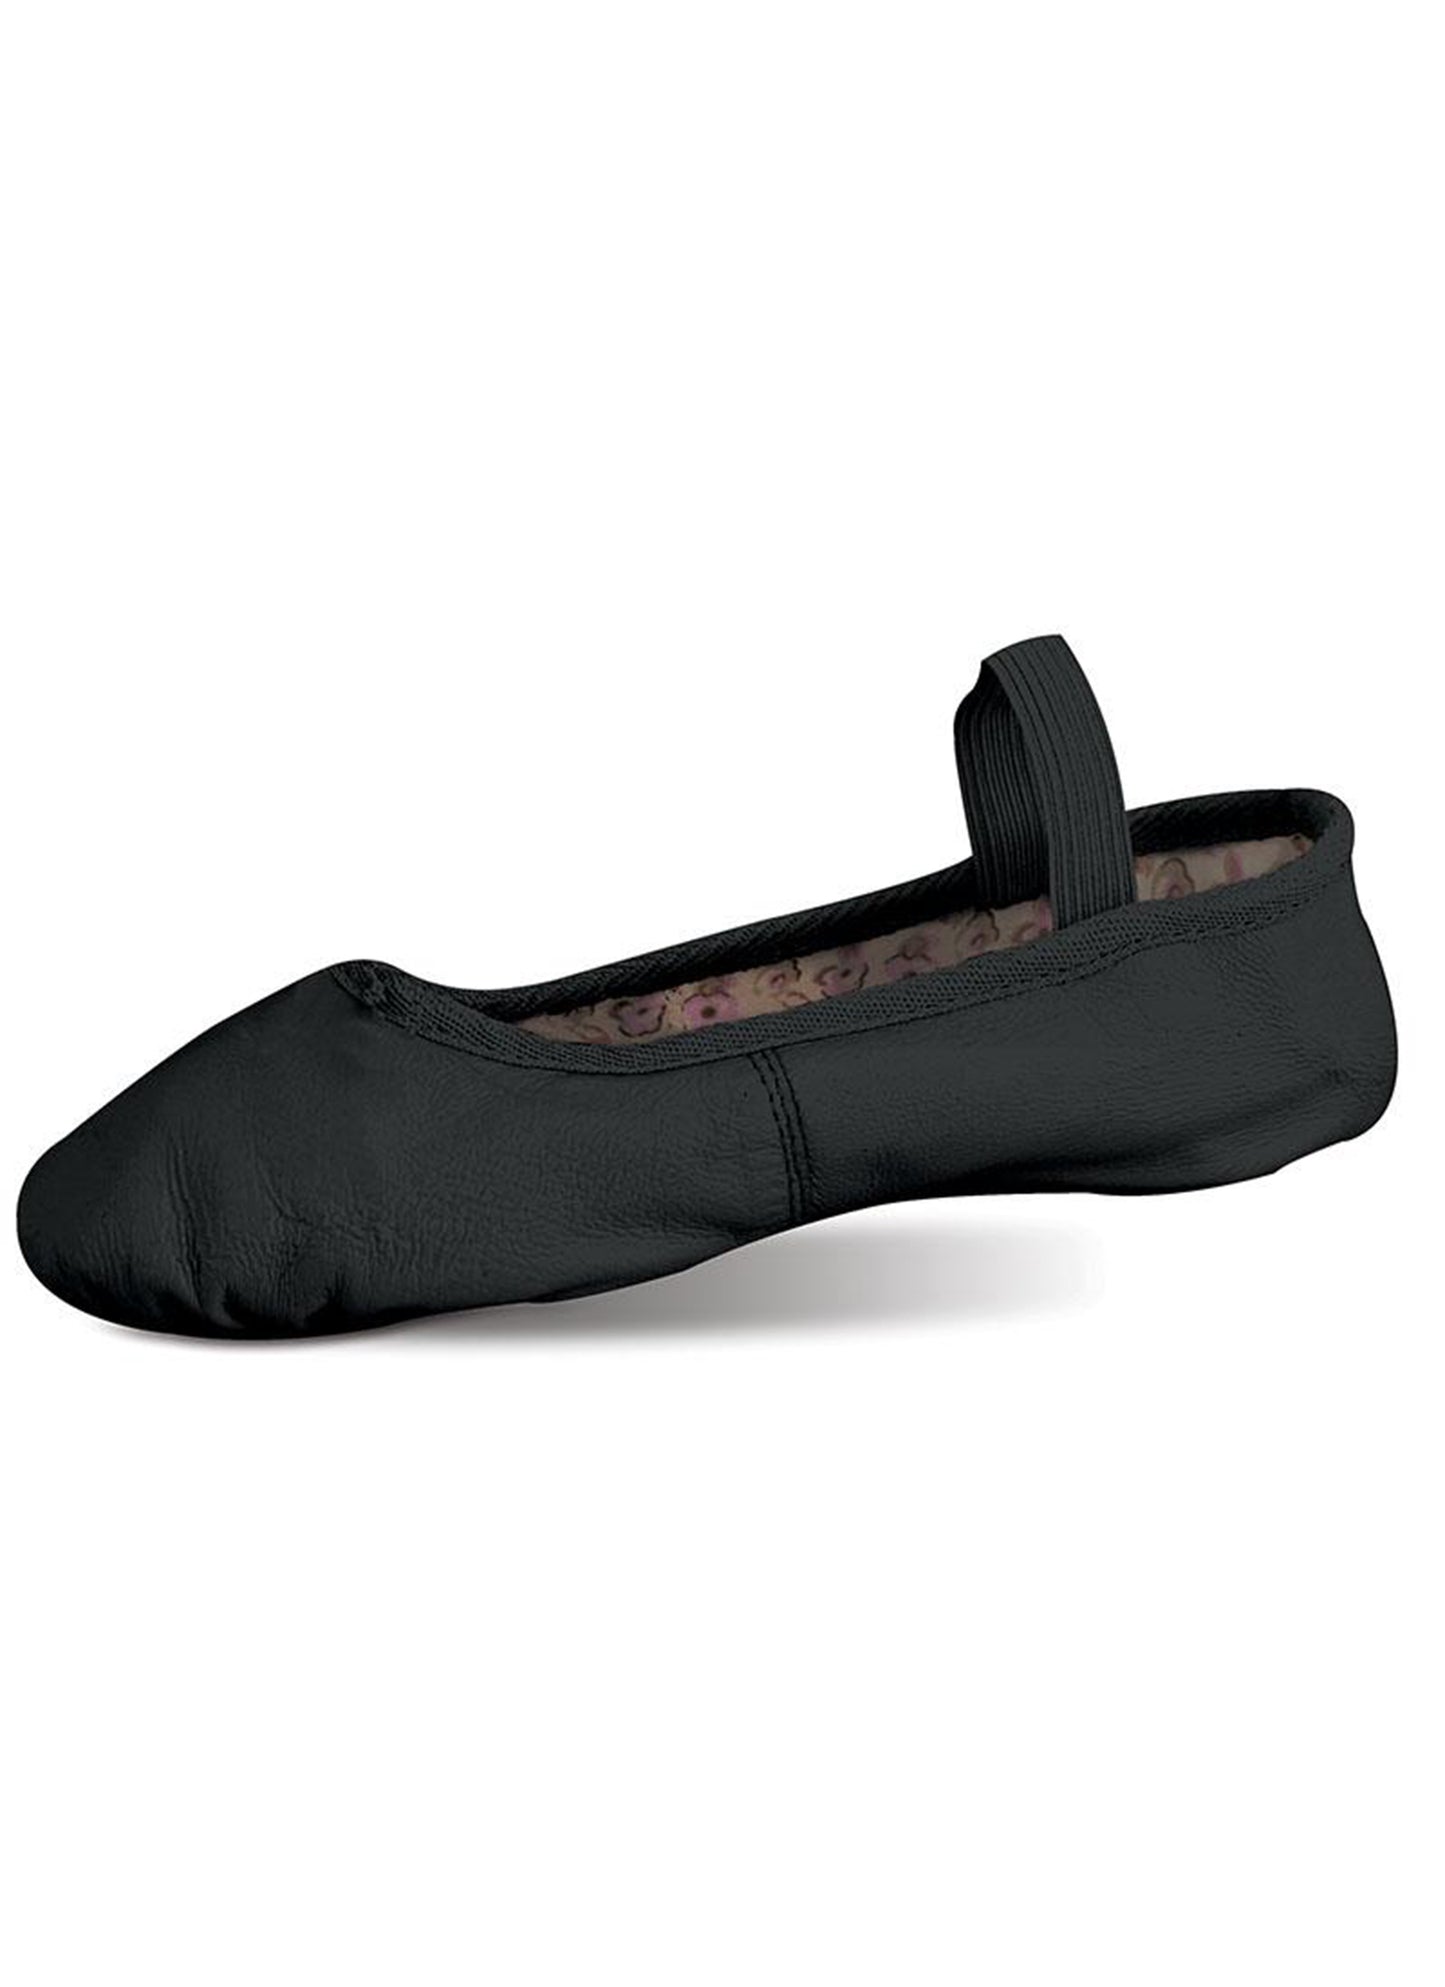 Danznmotion Black Leather Full Sole Ballet Shoe